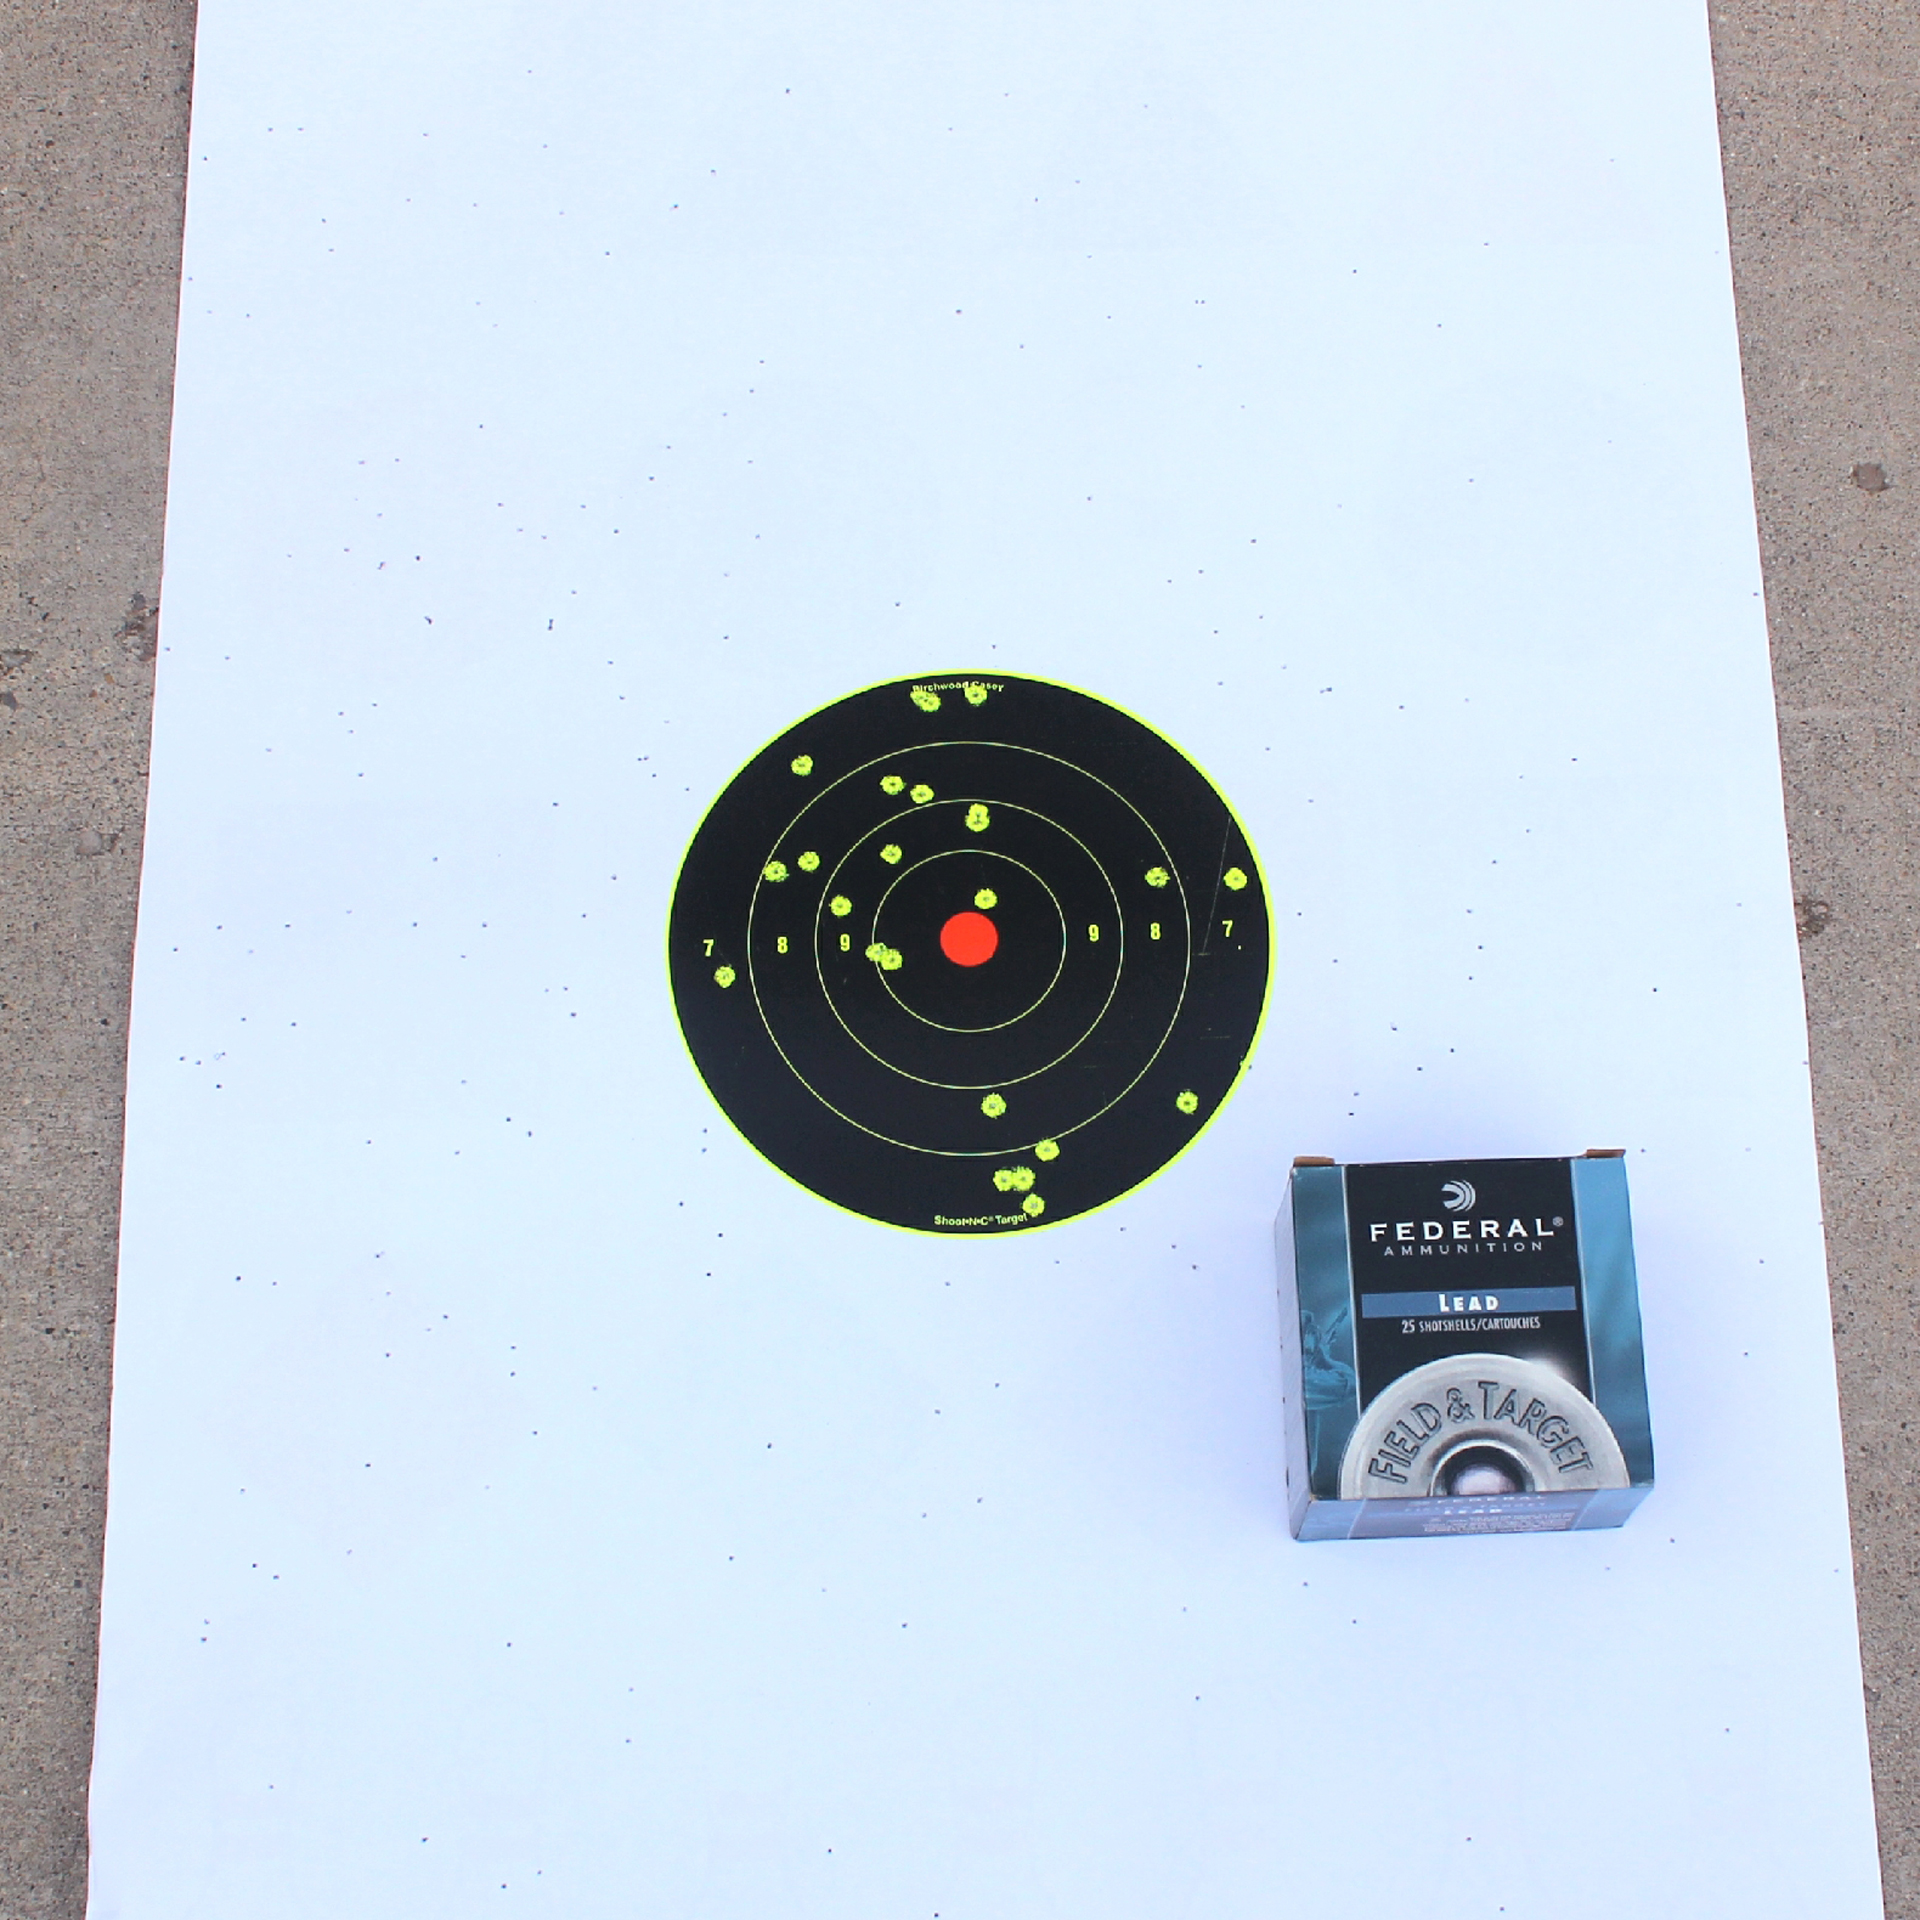 Heritage Badlander ammunition testing target pattern bullseye ammo box white paper